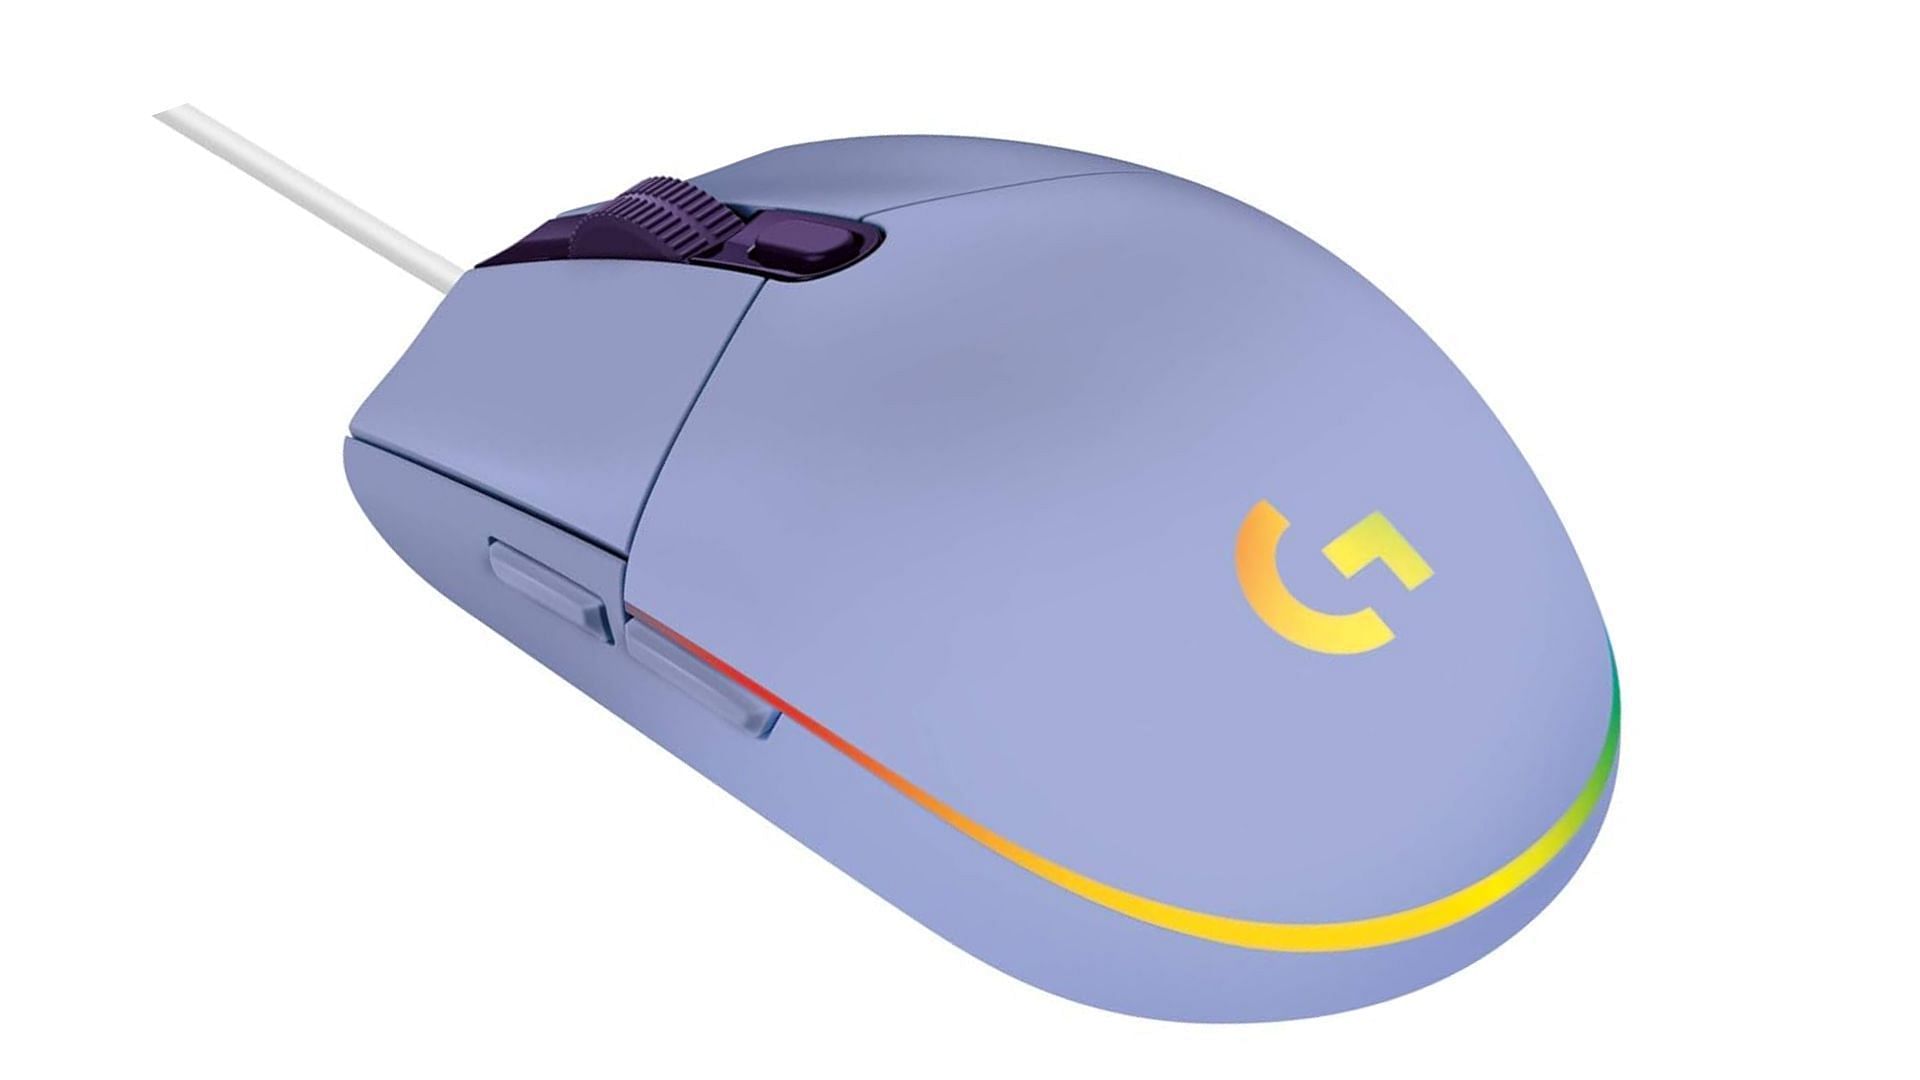 Simple yet decent gaming mouse (Image via Logitech)